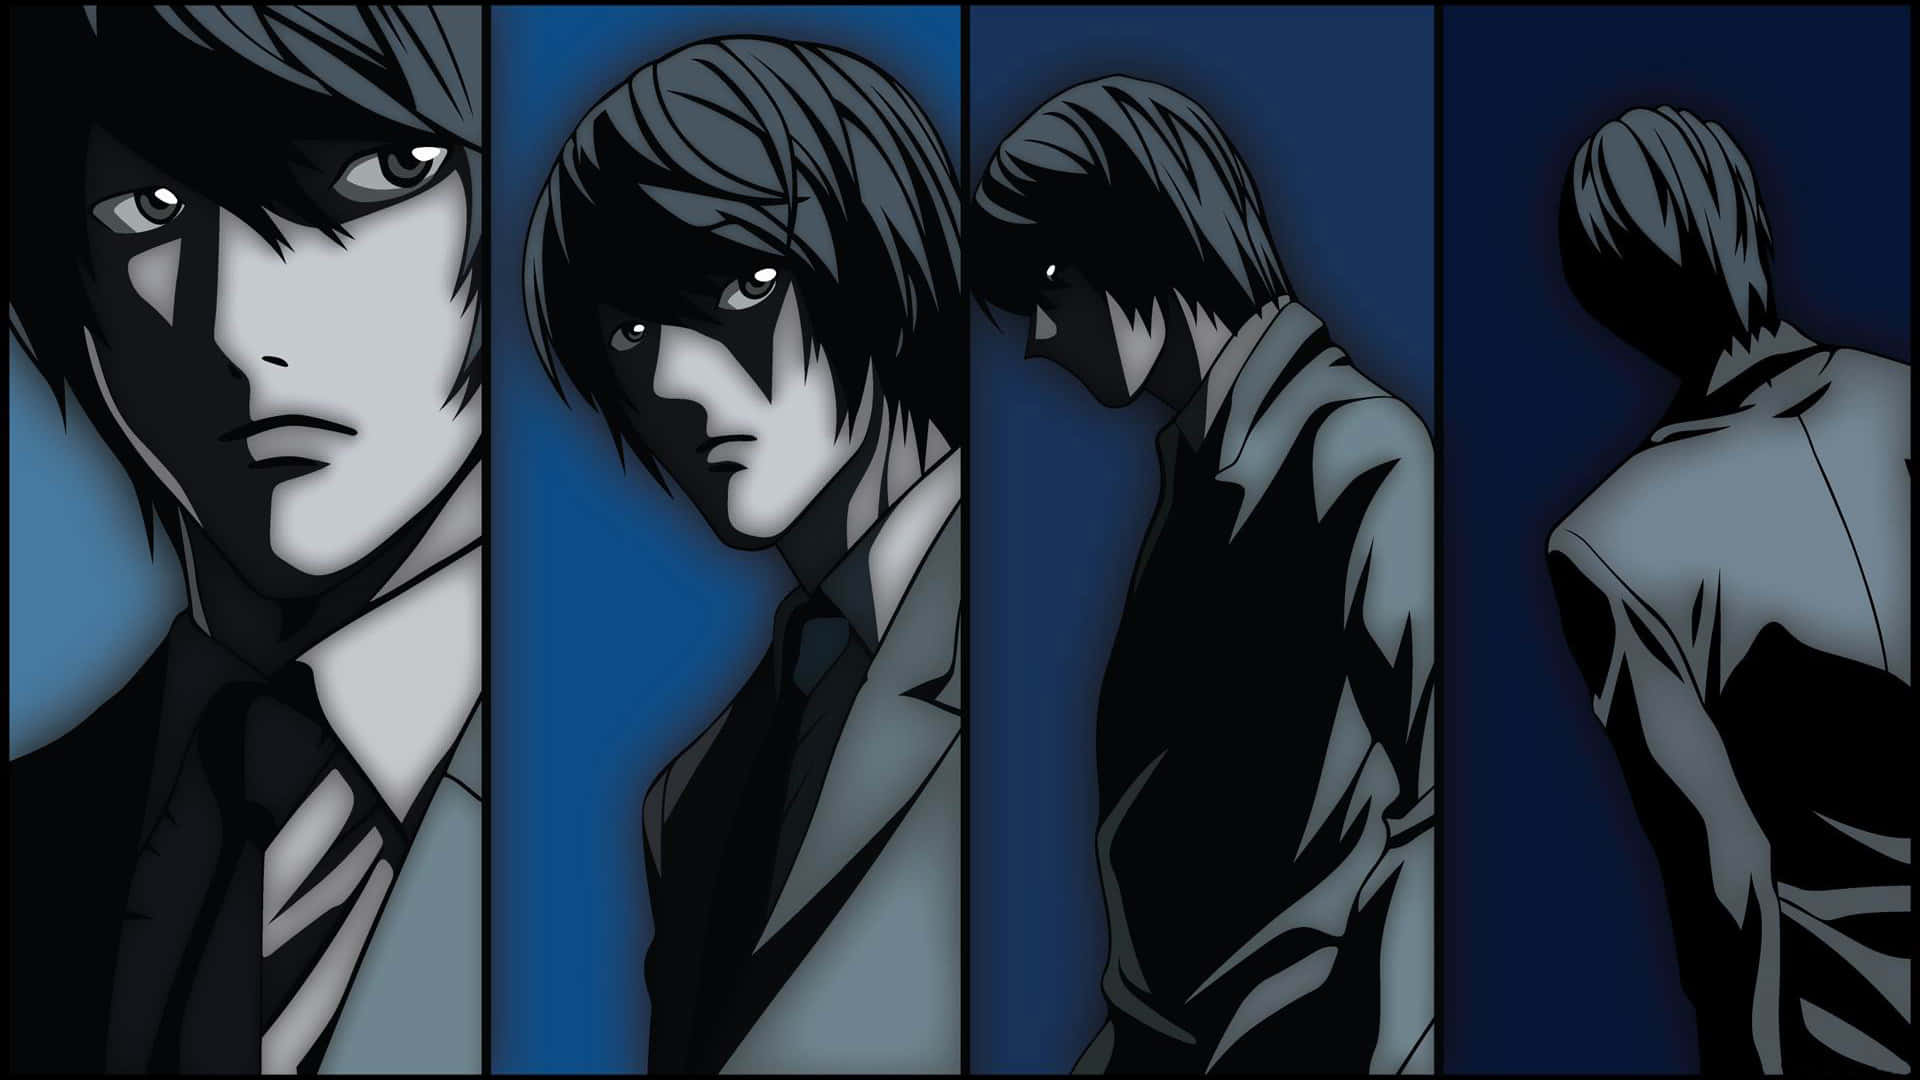 Lightyagami, Huvudpersonen I Anime-serien Death Note